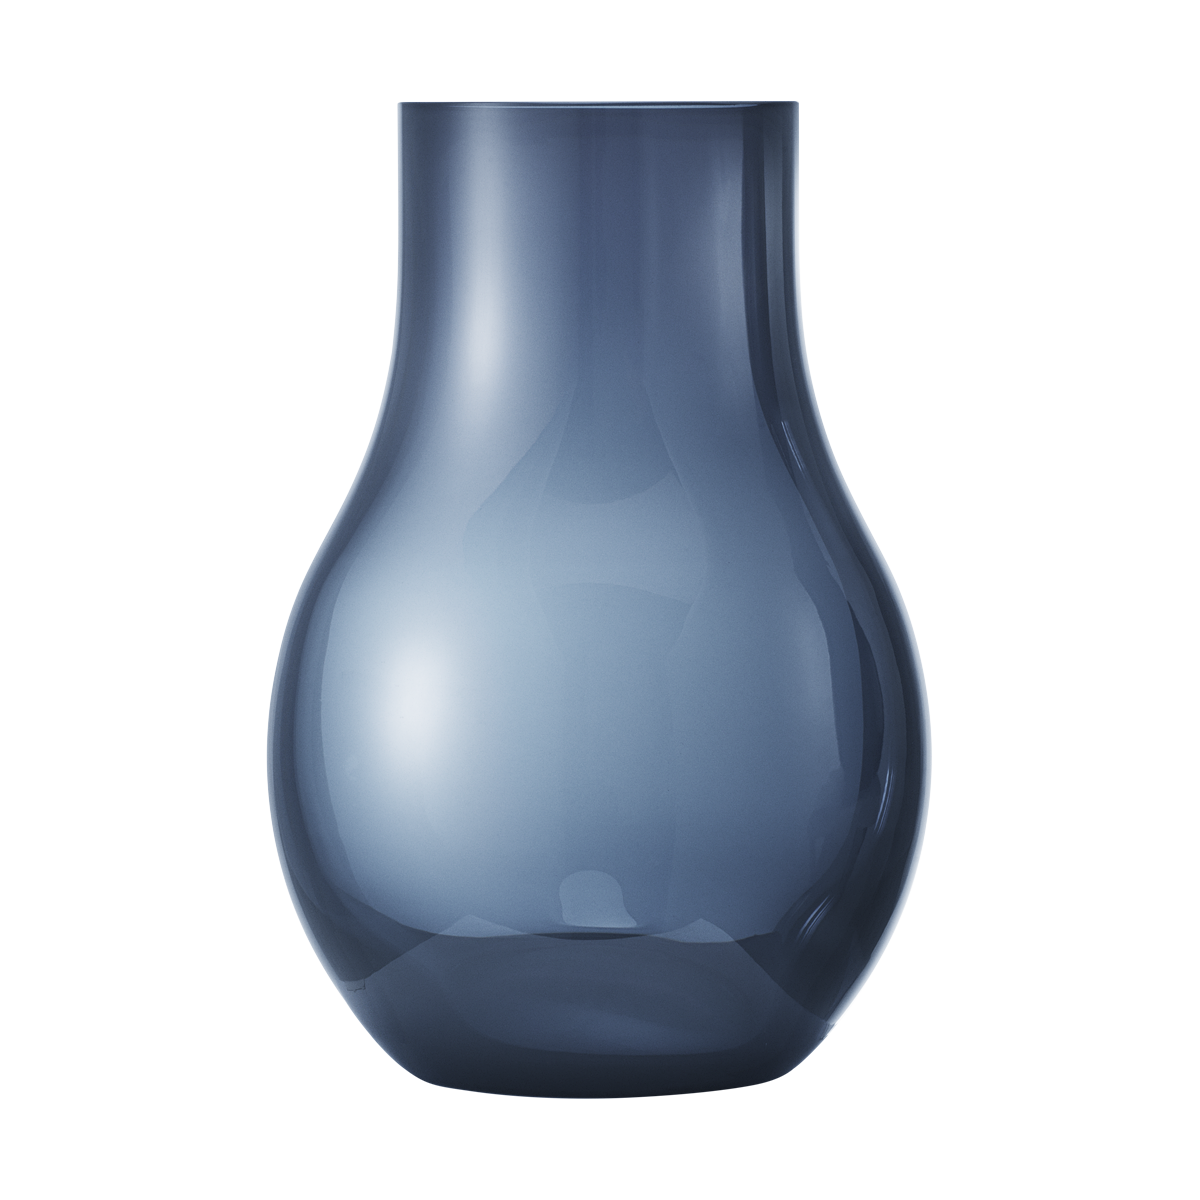 Cafu small blue glass flower vase | Georg Jensen